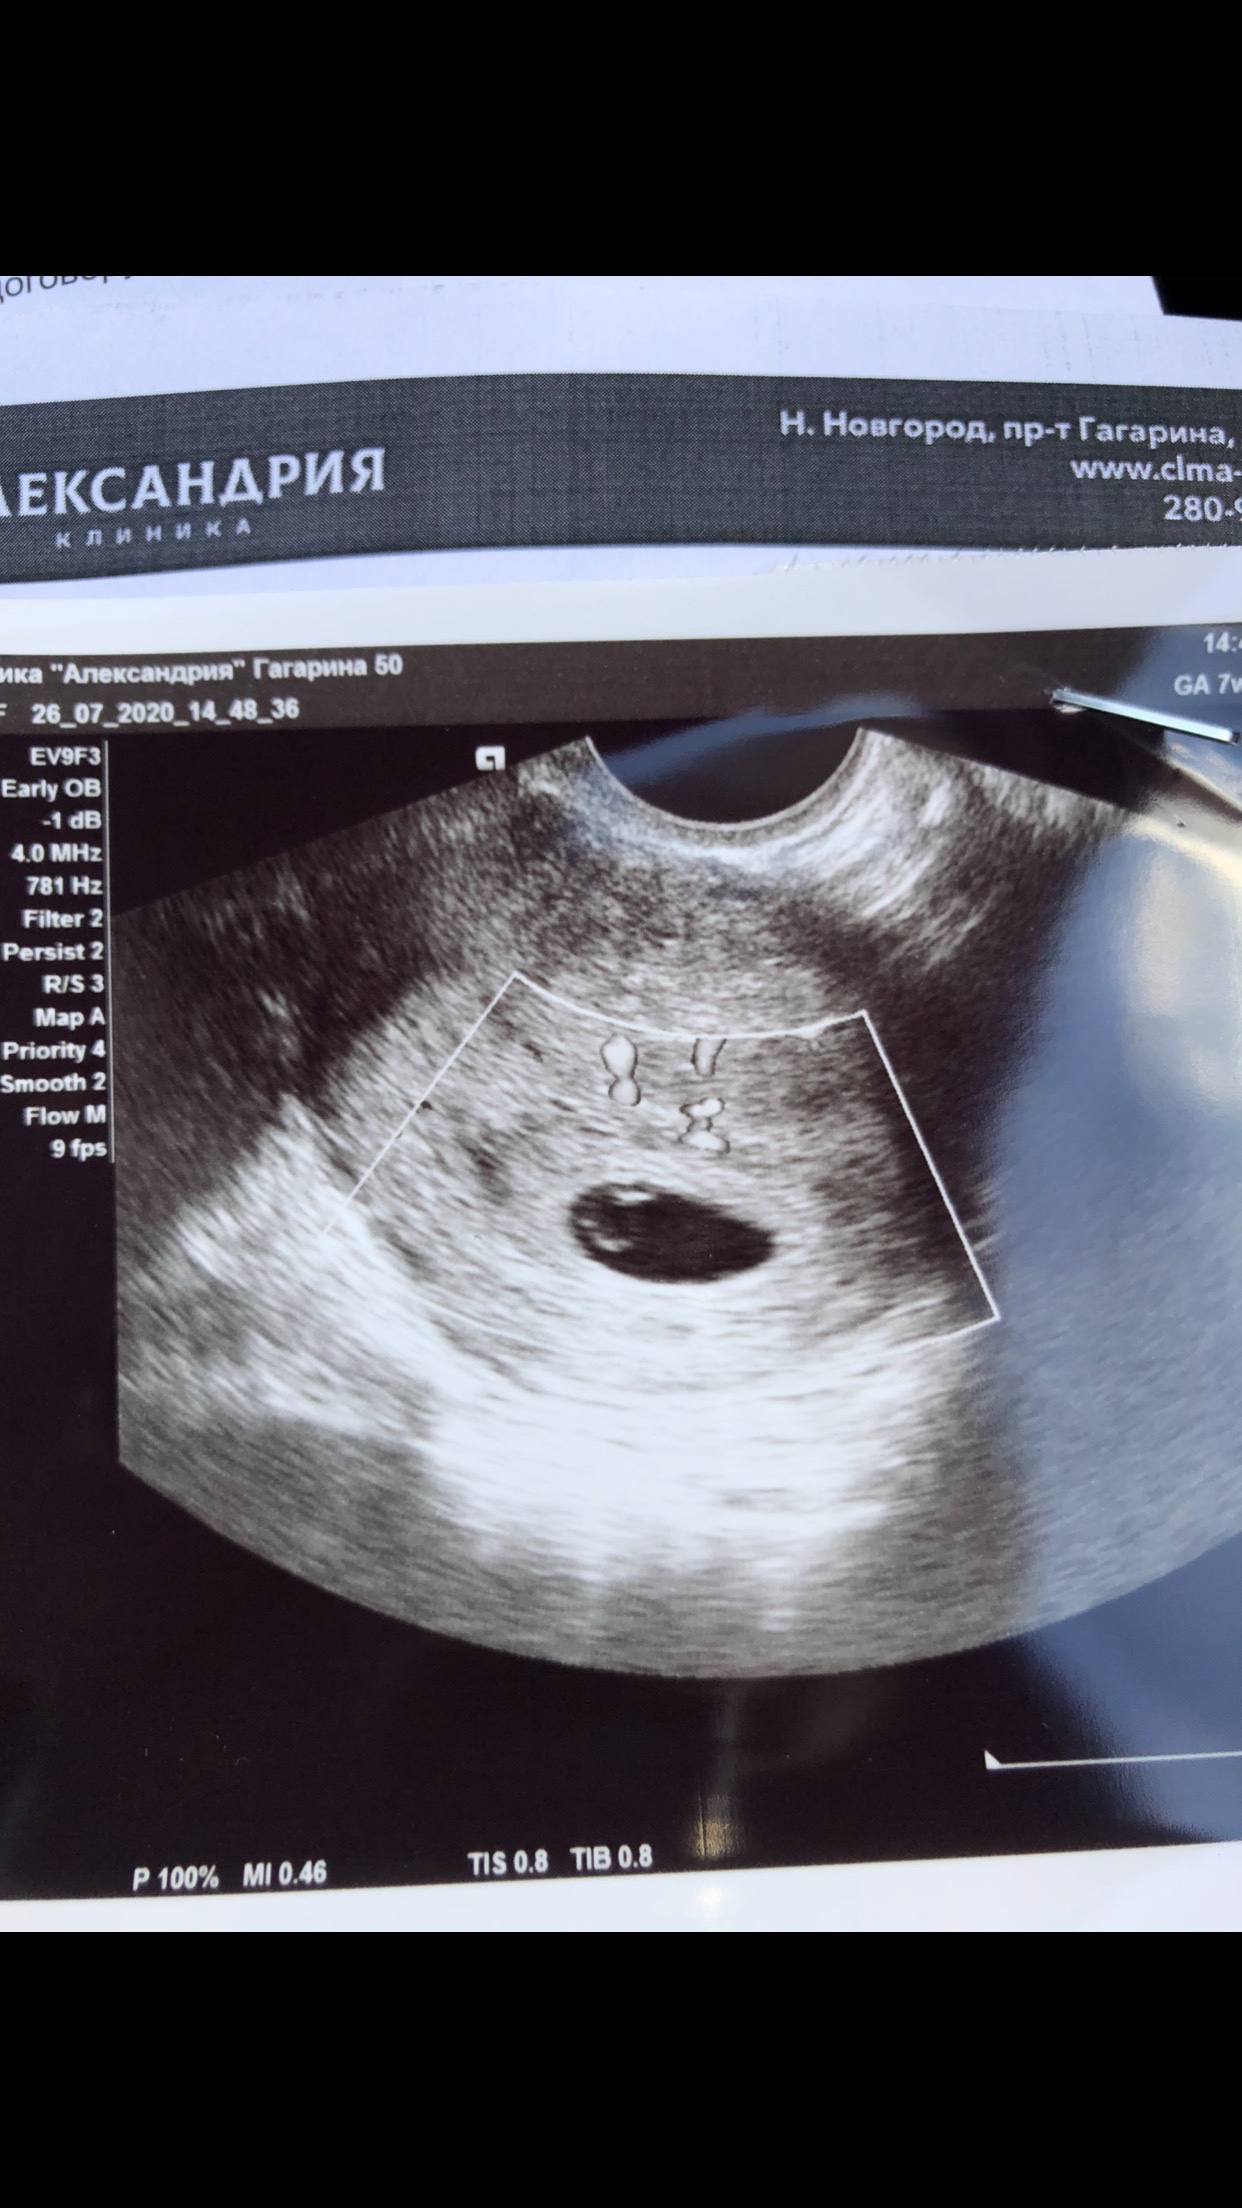 эмбрион 6 день